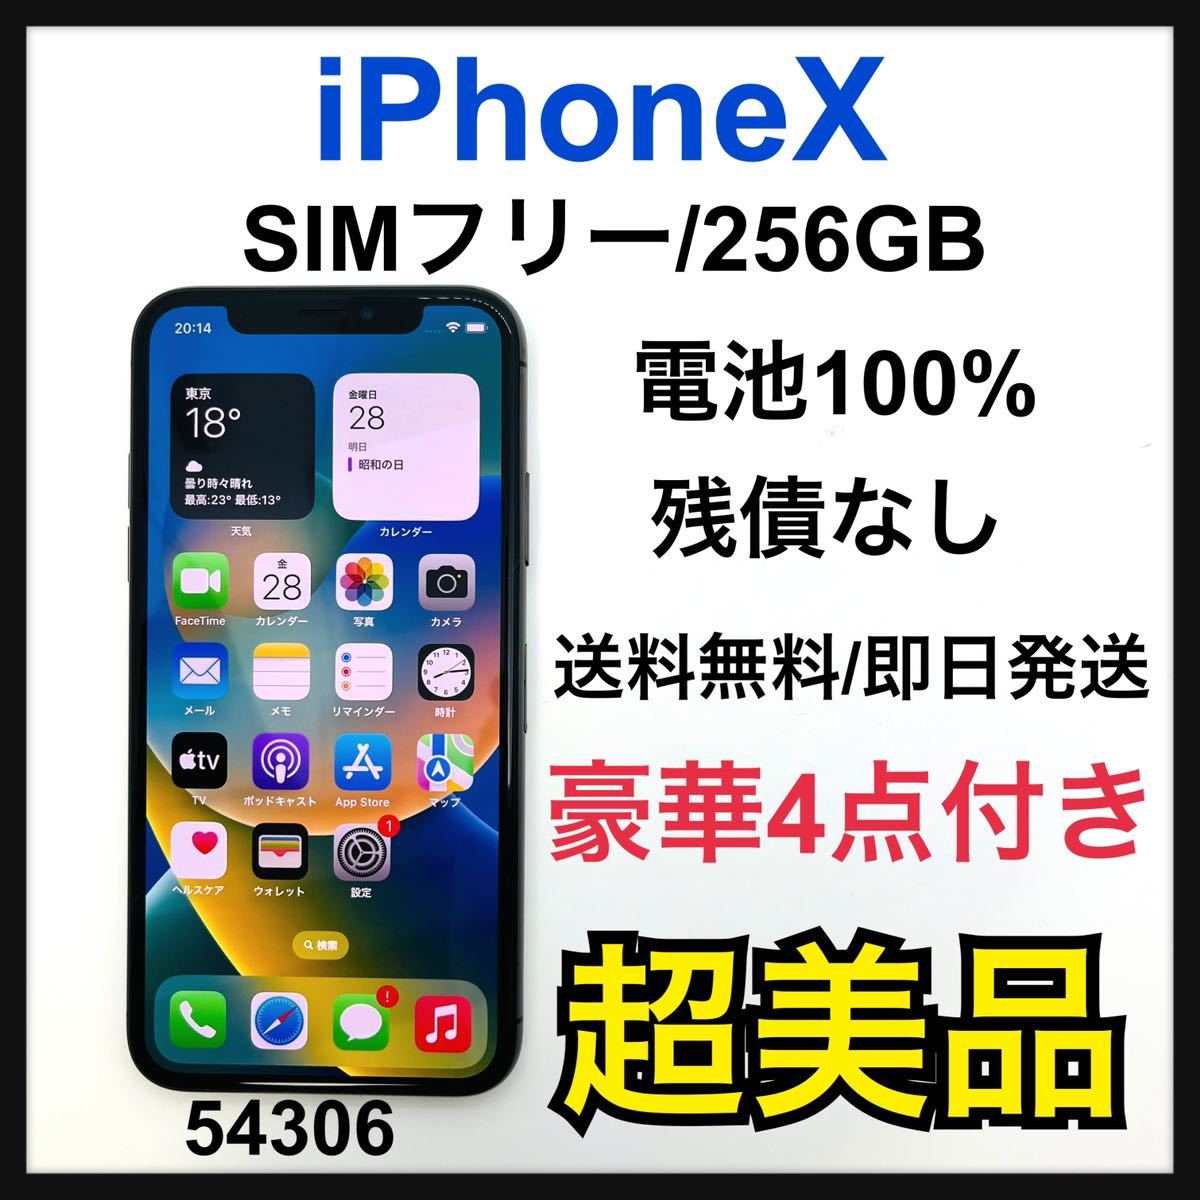 S 100% iPhone X Space Gray 256 GB SIMフリー